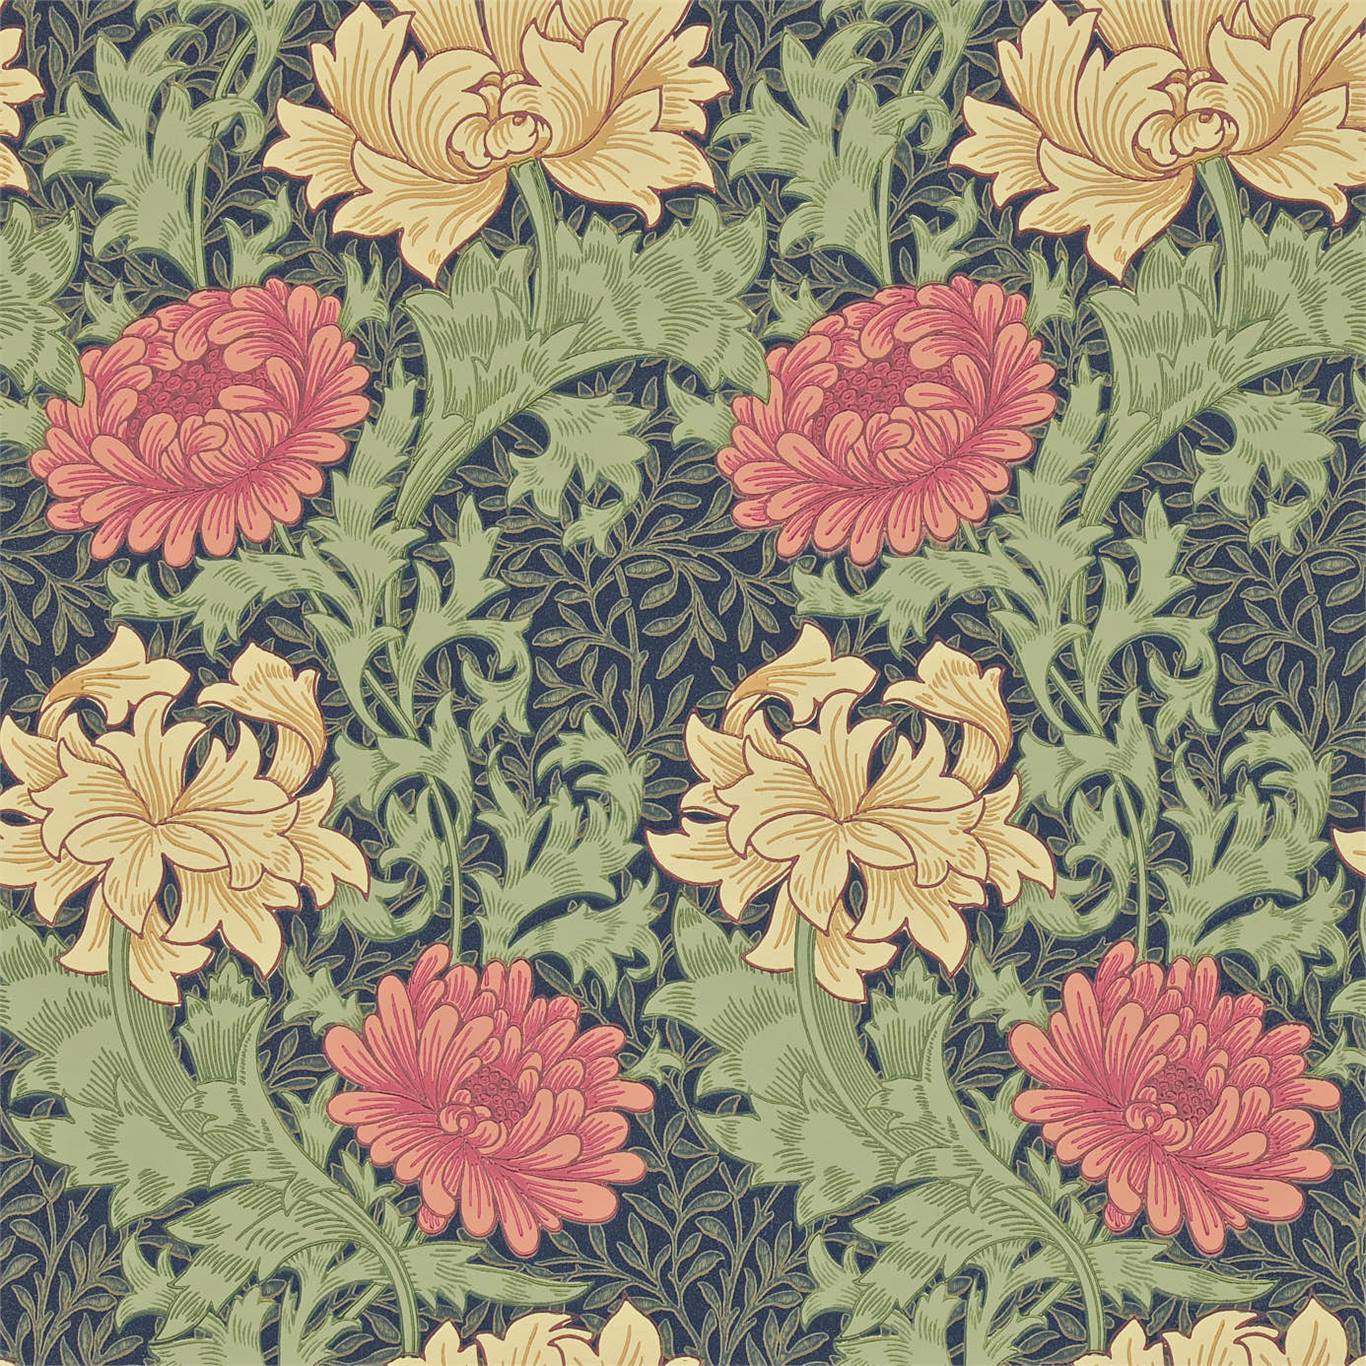 Chrysanthemum Indigo Wallpaper DCMW216854 by Morris & Co